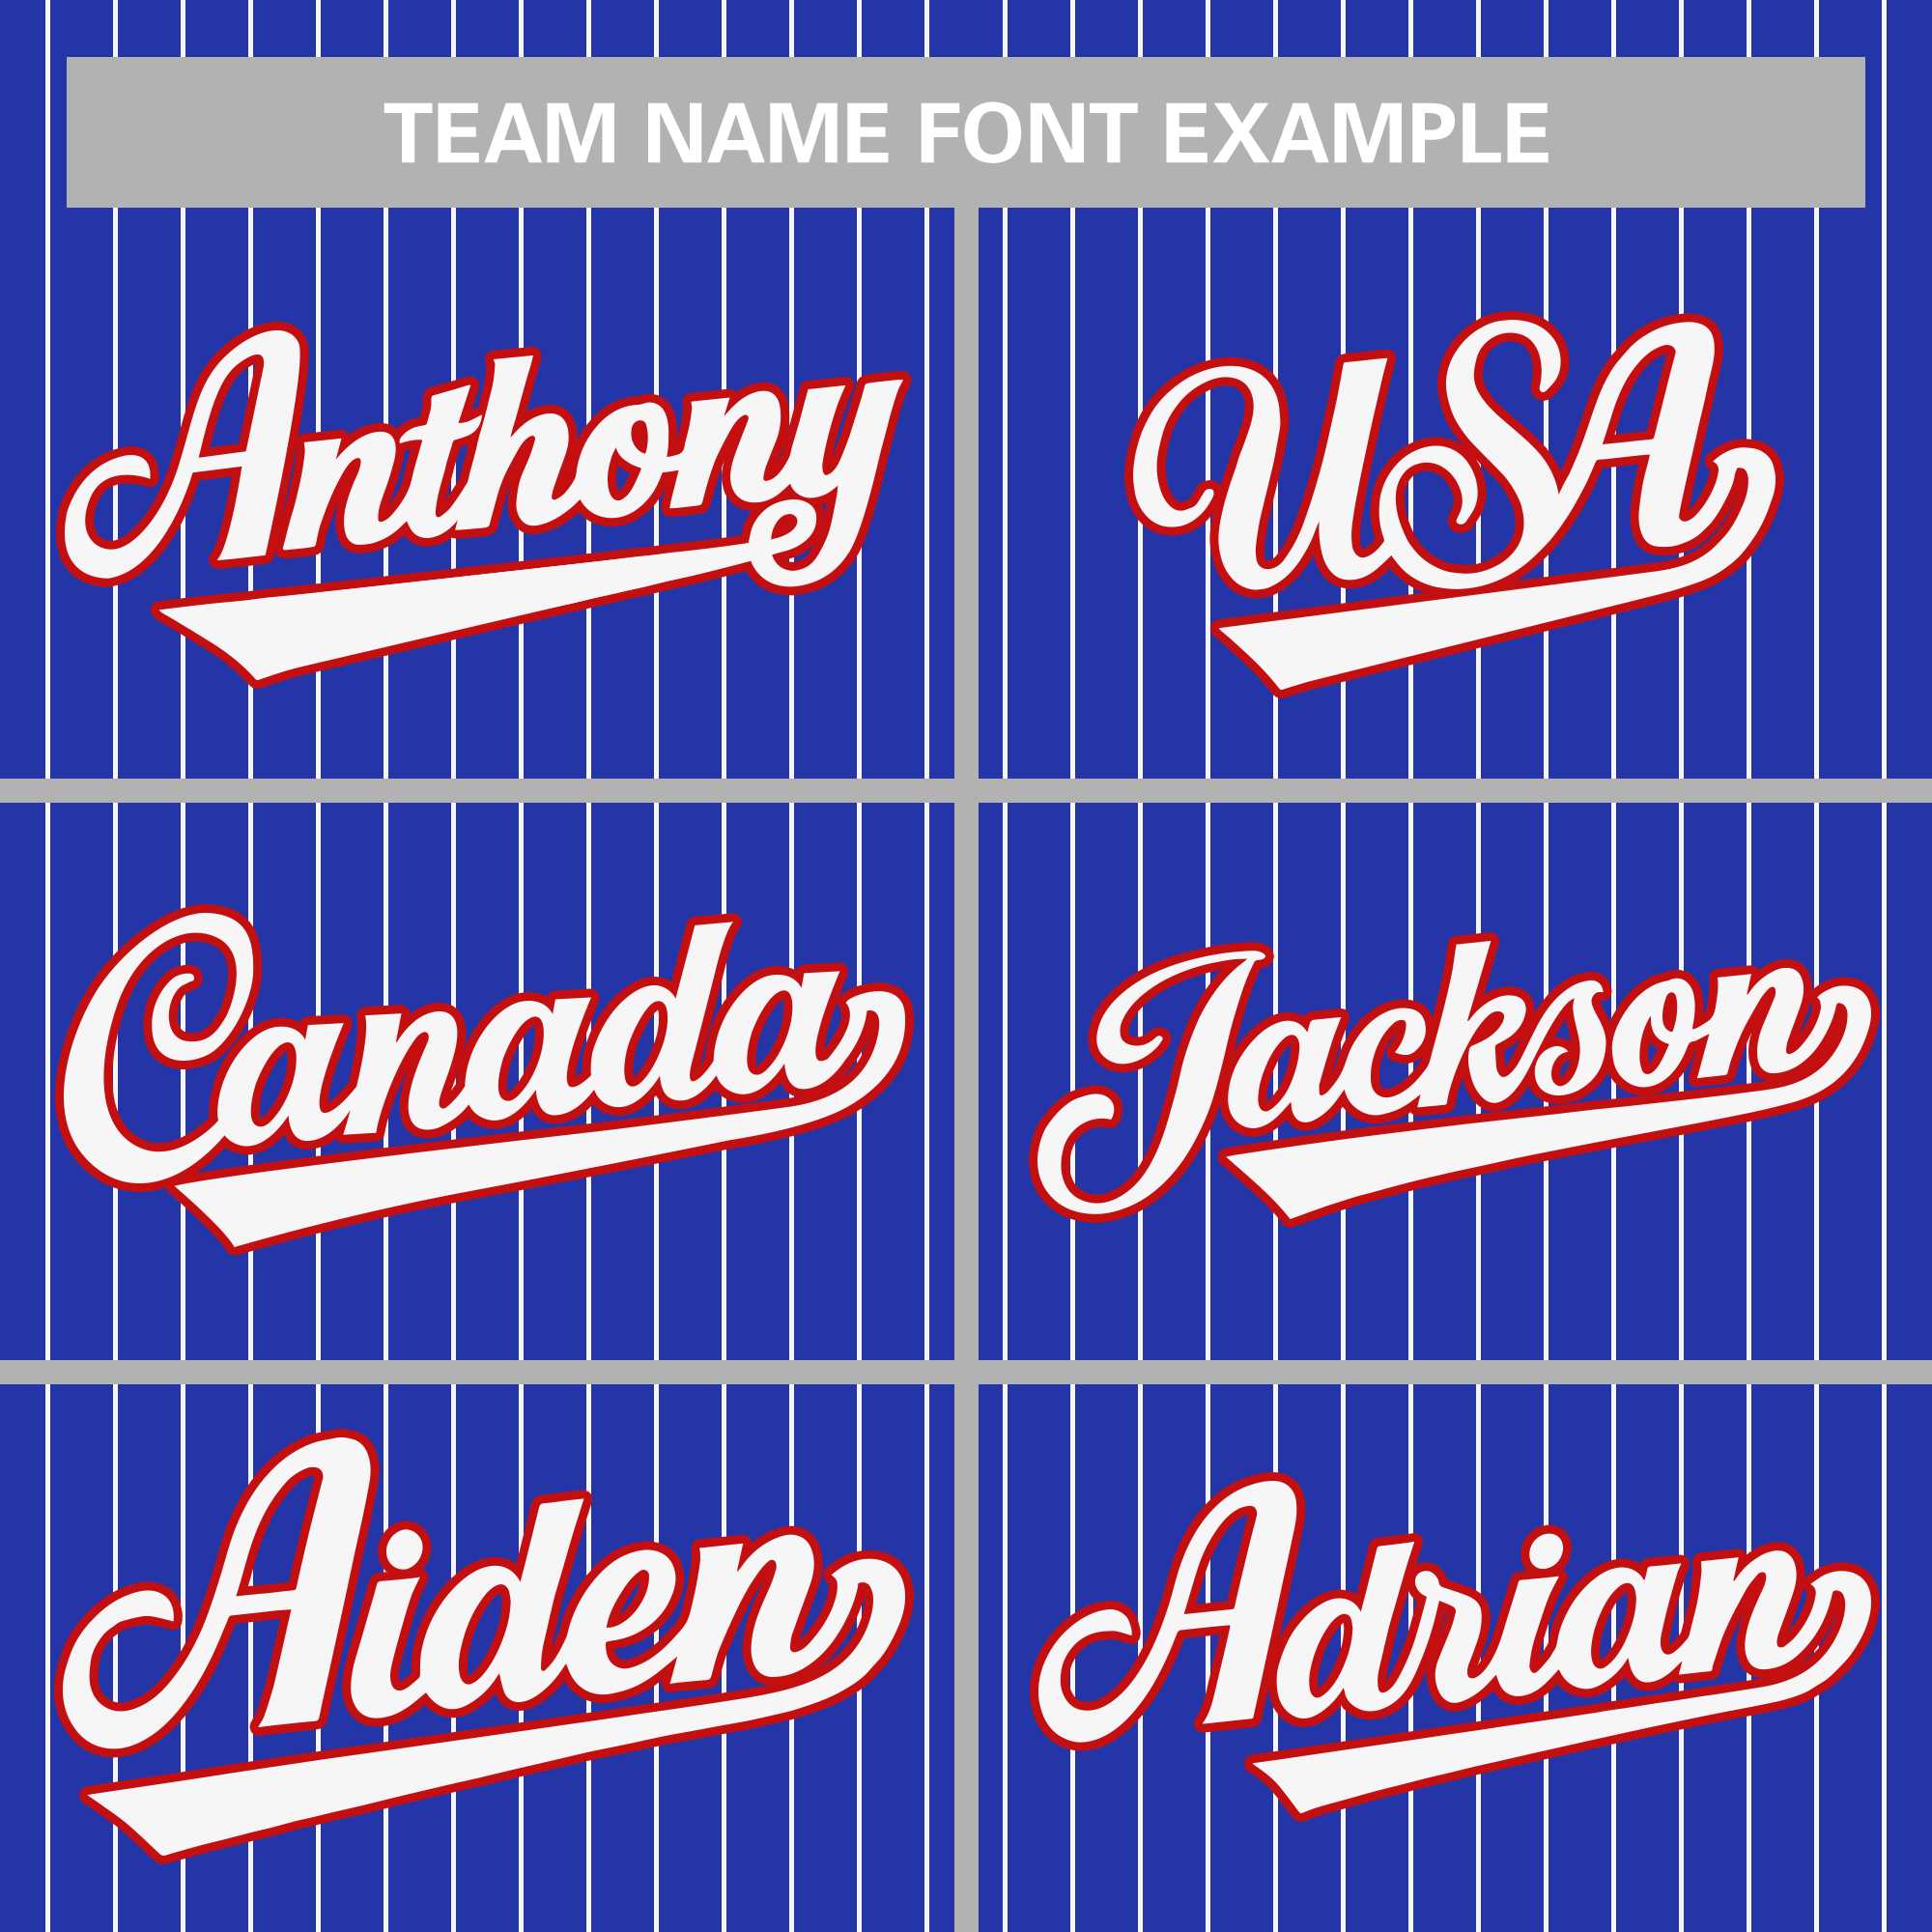 pinstripe softball uniforms team name font